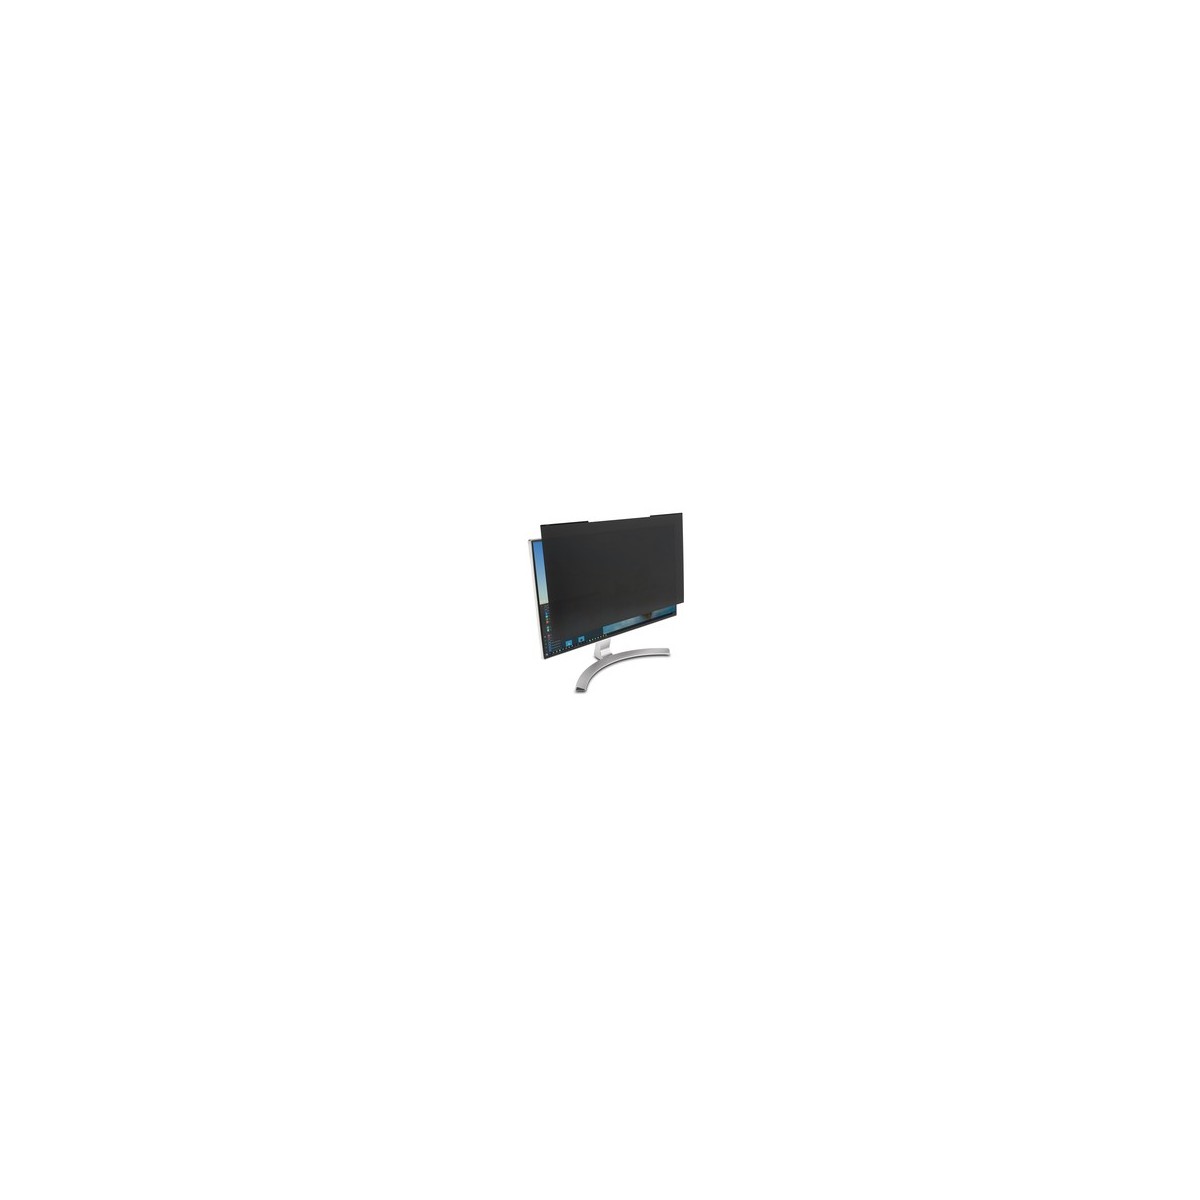 Kensington MagPro™ Magnetic Privacy Screen Filter for Monitors 24” (16:10) - 61 cm (24) - 16:10 - Monitor - Frameless display pr